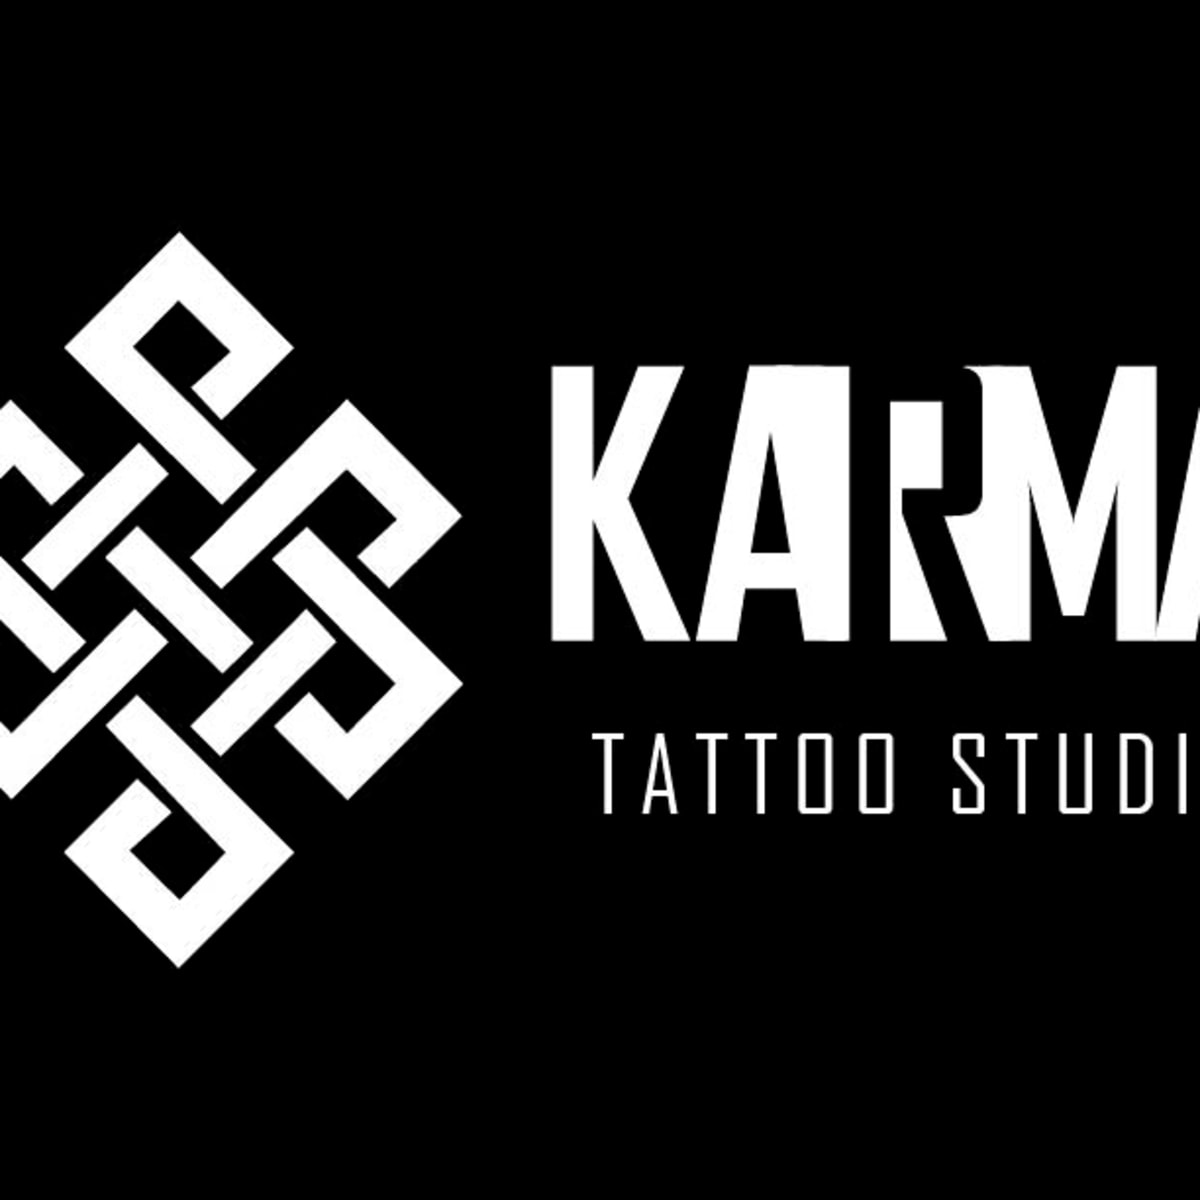 Share 143+ karma images tattoo best